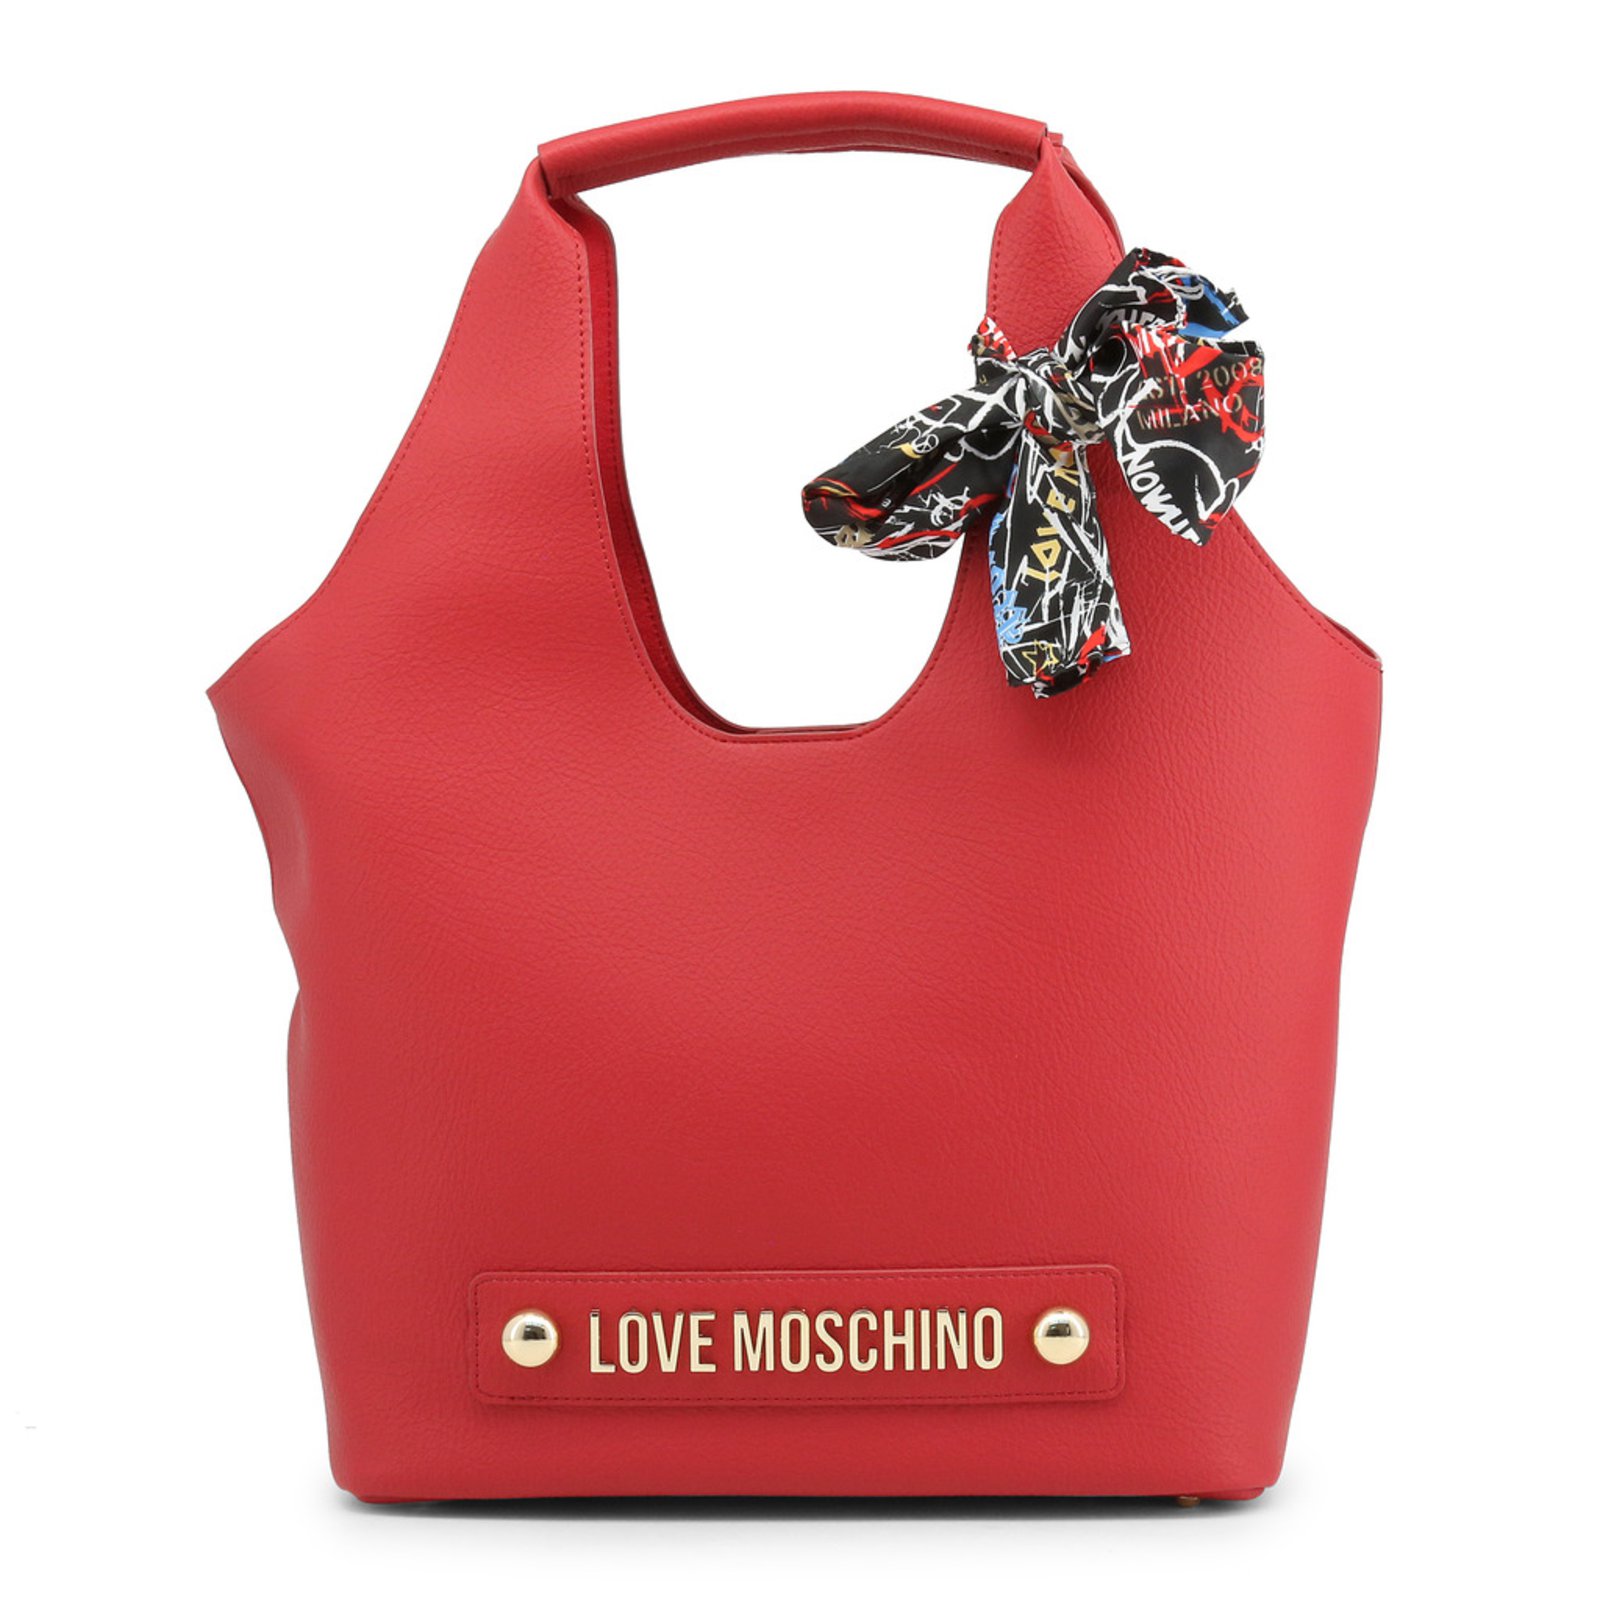 Love Moschino сумка (Хобо). Красная сумка нейлон Love Moschino jc4303. Moschino 4153 Red Bag 2019. Сумка Москино красная. Дама лов